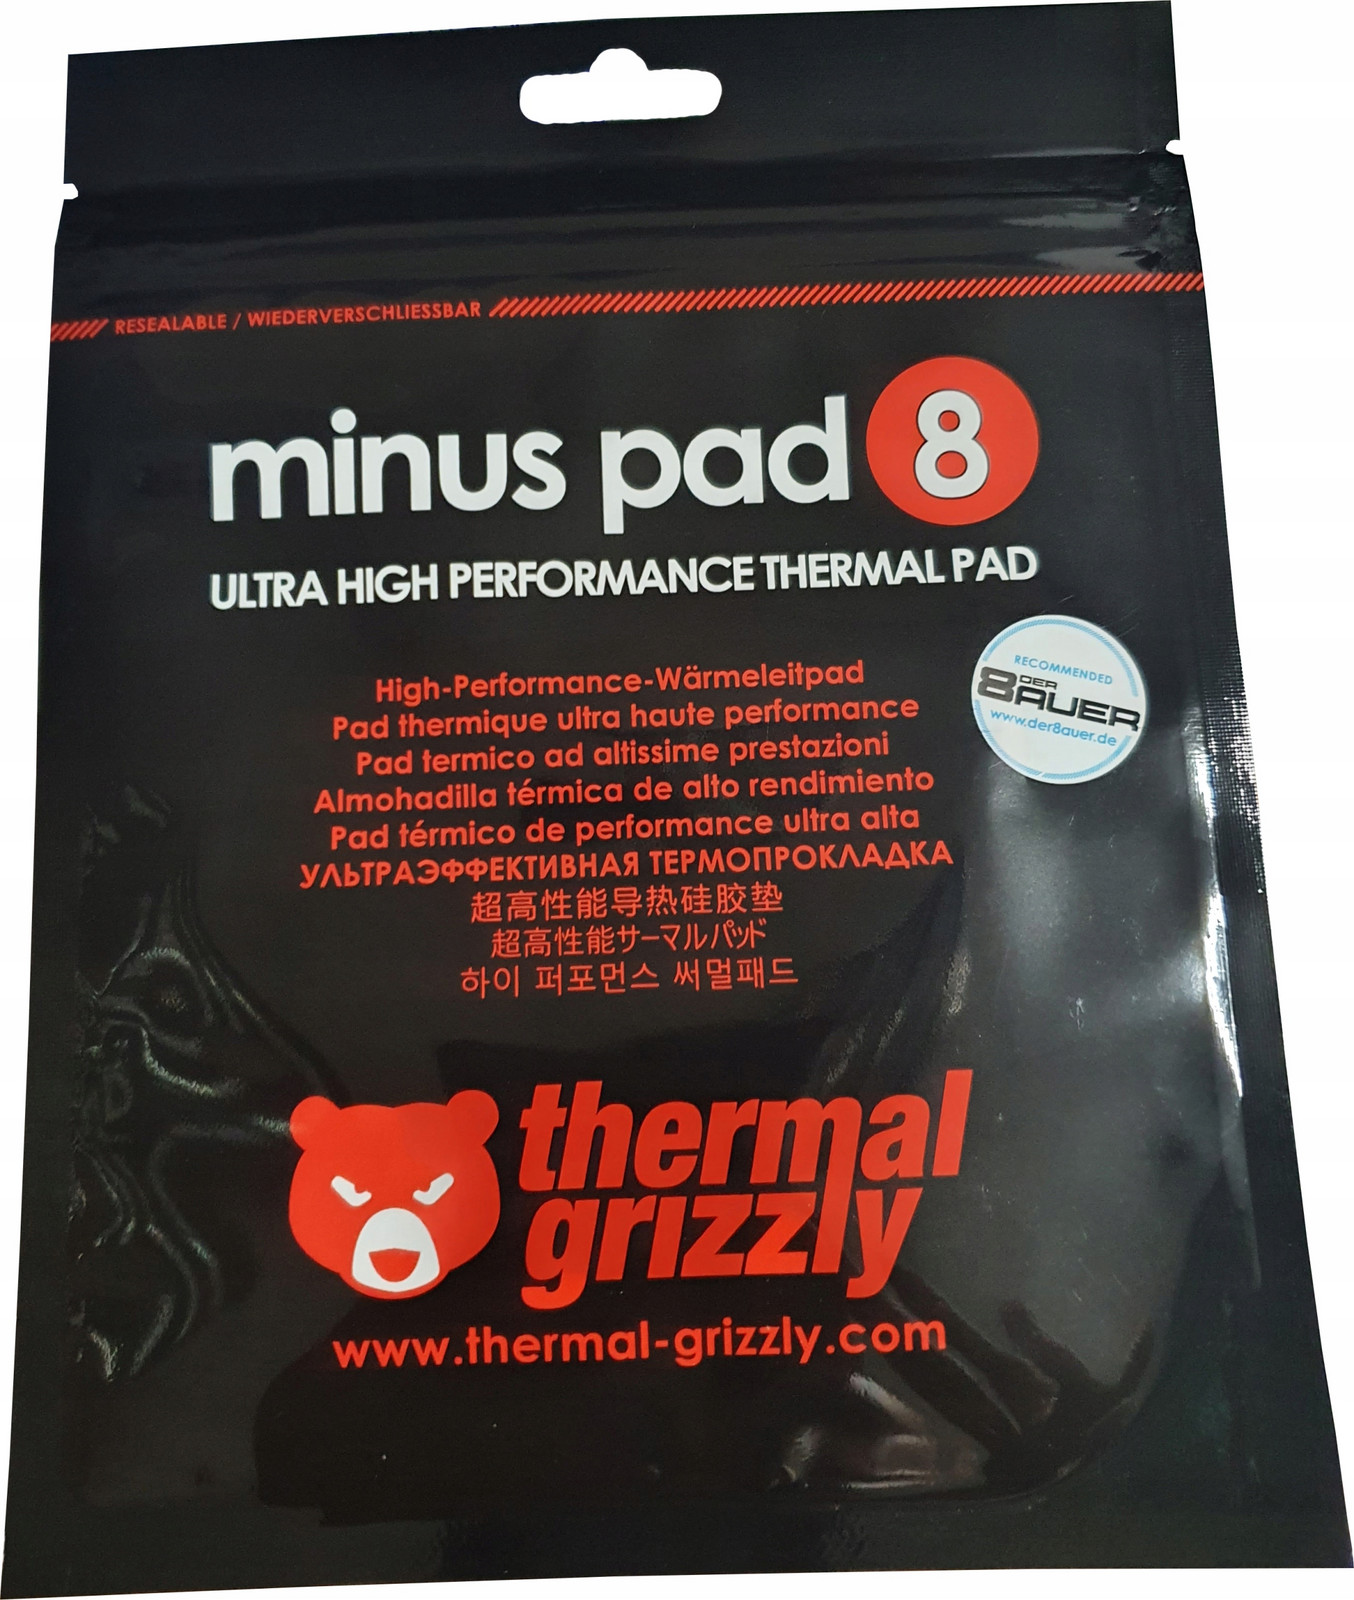 Thermal Grizzly Minus Pad 8 100x100x1mm thermopad, termopad